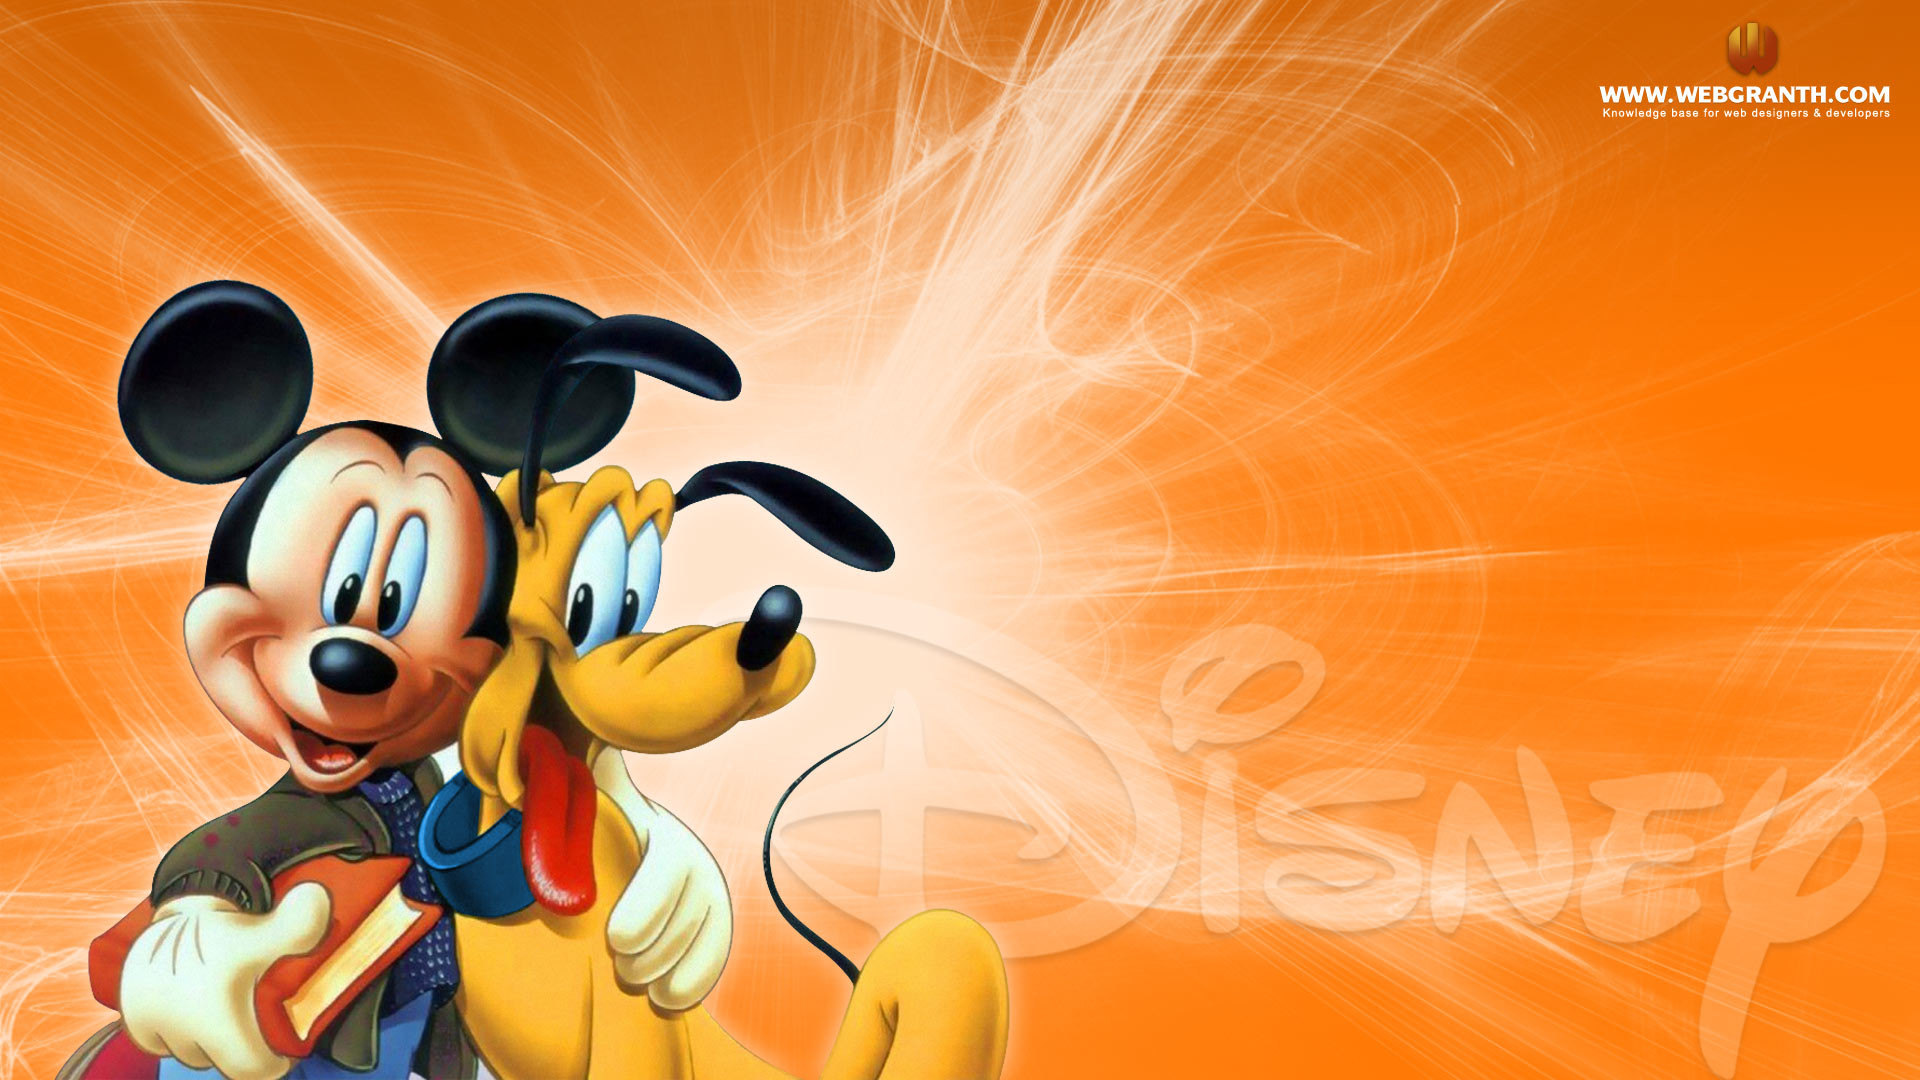 1920x1080 Cartoon Mickey Mouse wallpaper - 1187551